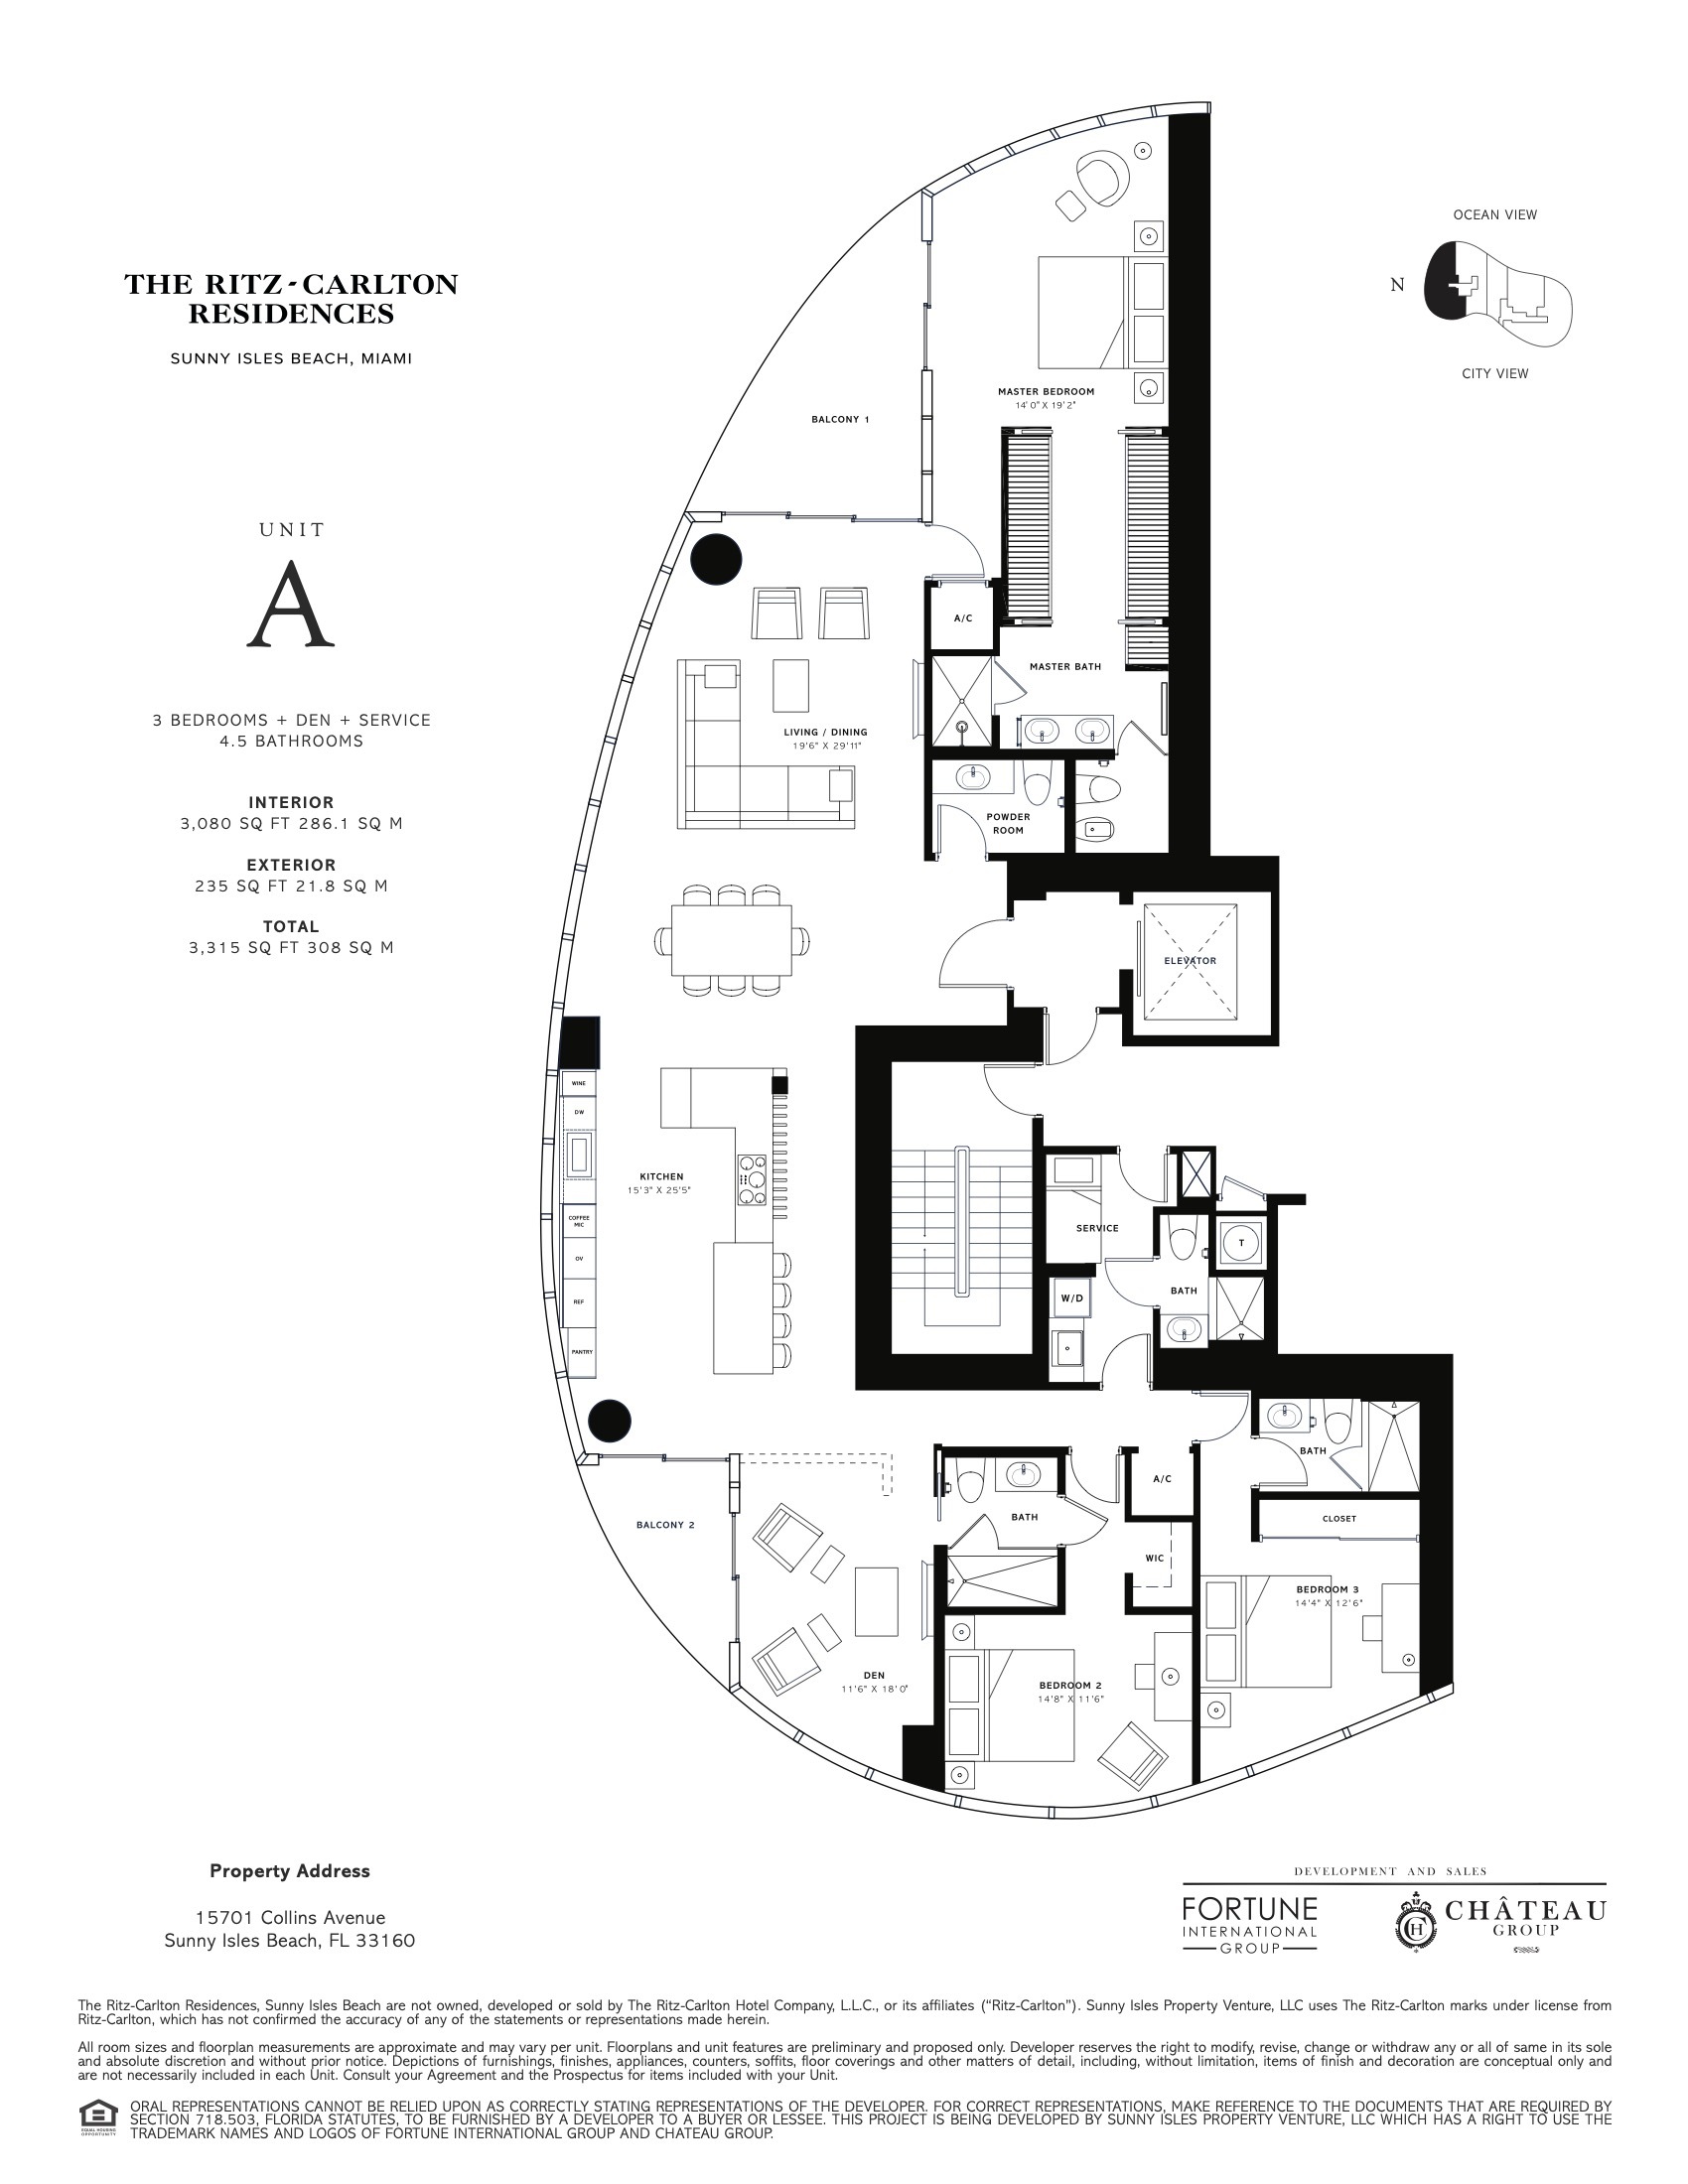 Floor Plan for Ritz-Carlton Sunny Isles Floorplans, Unit A